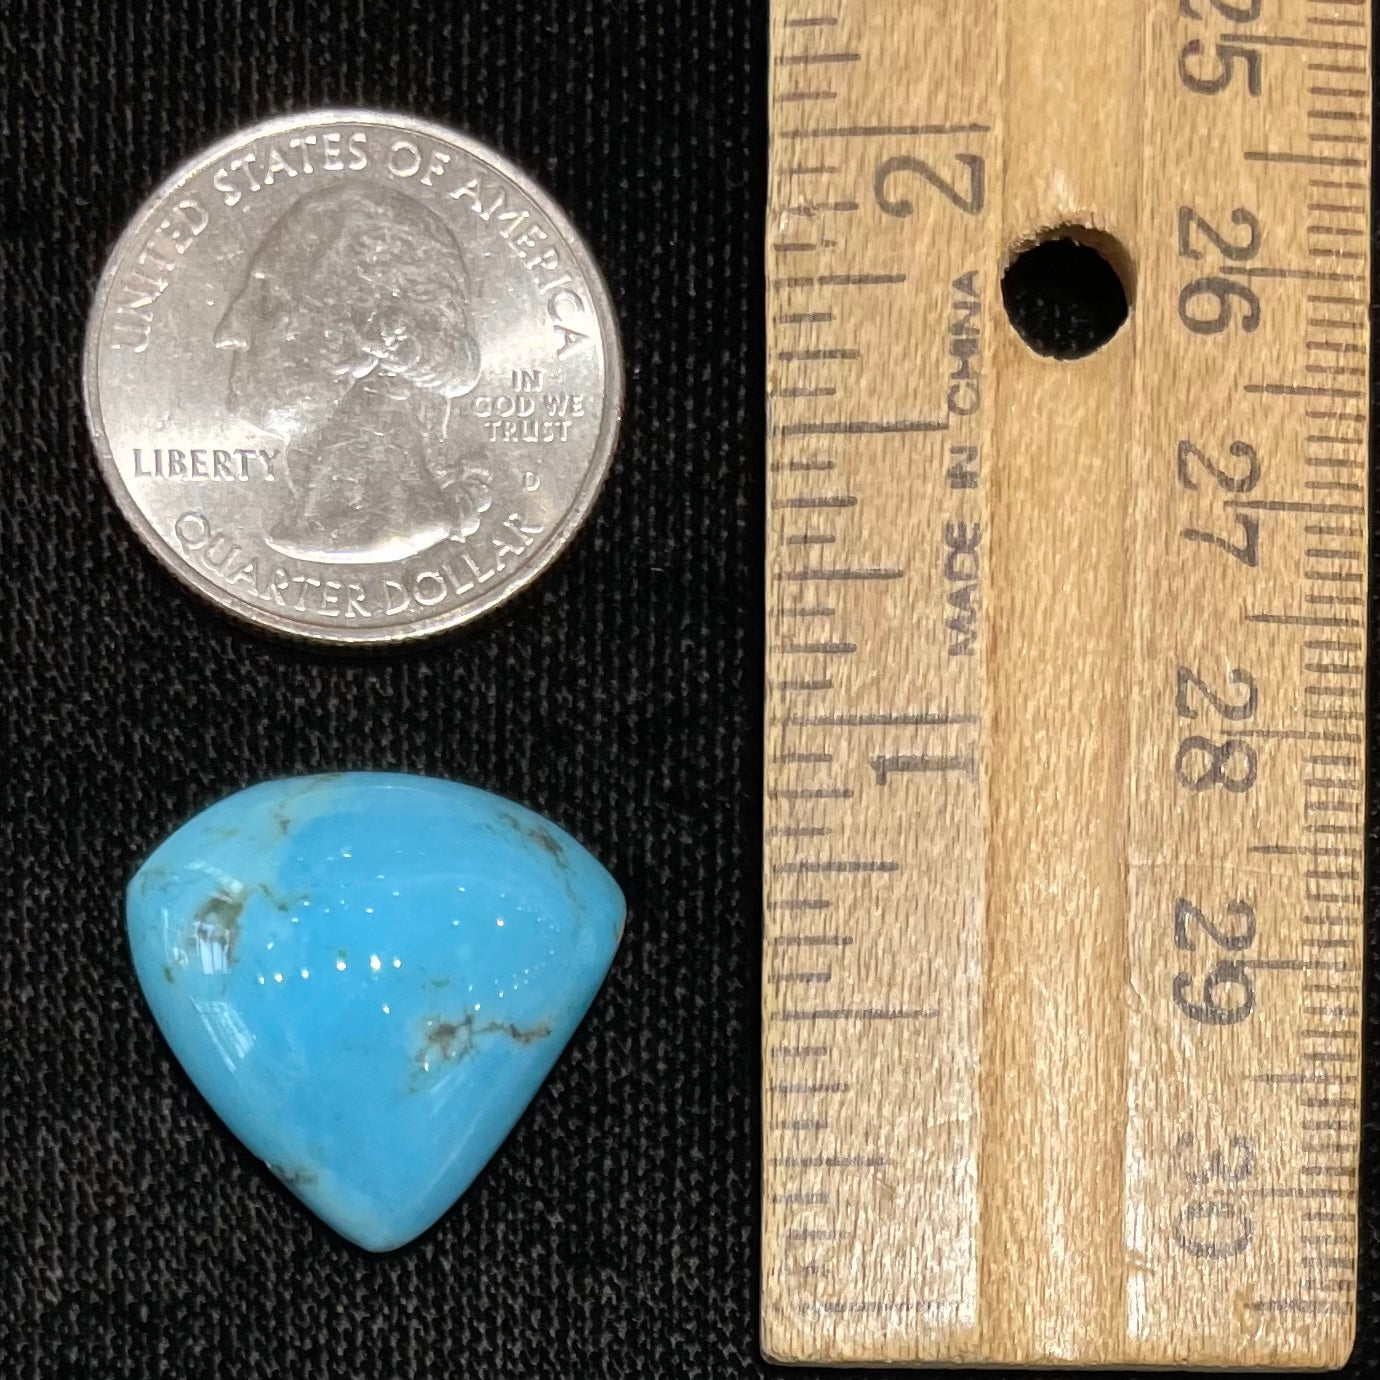 A loose, triangular cabochon cut blue turquoise stone from Sleeping Beauty Mine, Arizona.